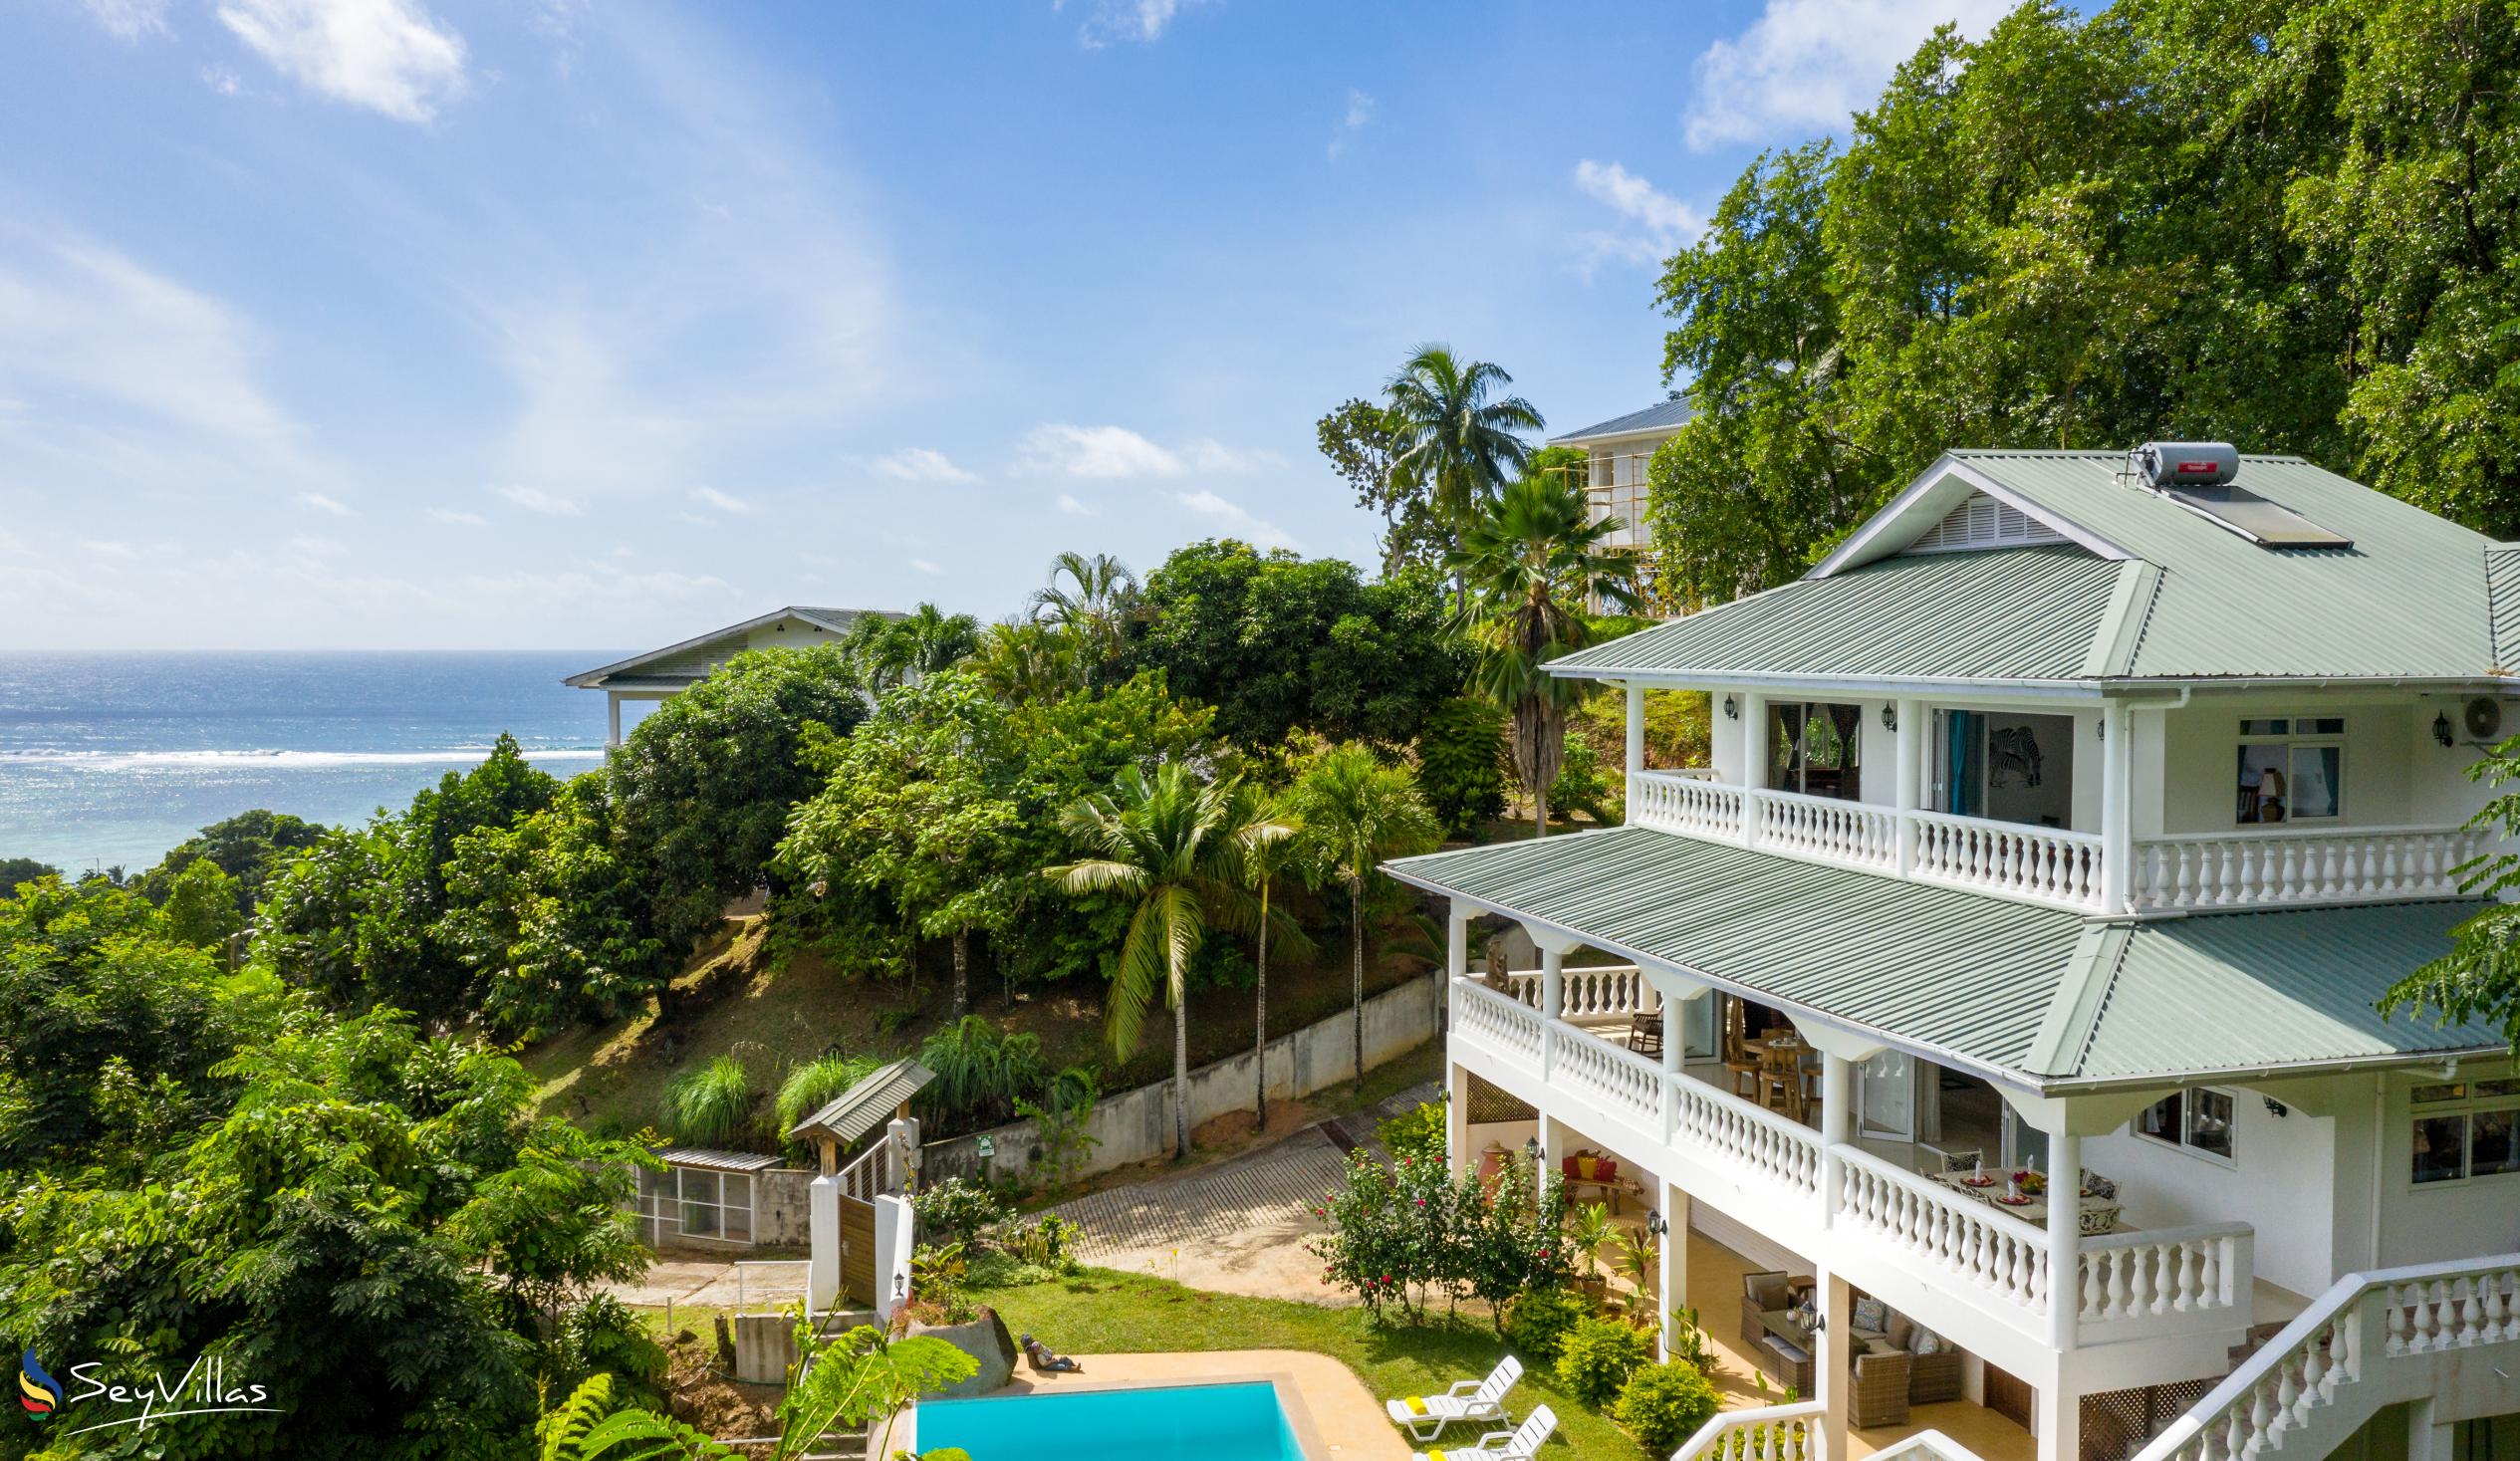 Foto 2: Villa Karibu - Aussenbereich - Mahé (Seychellen)